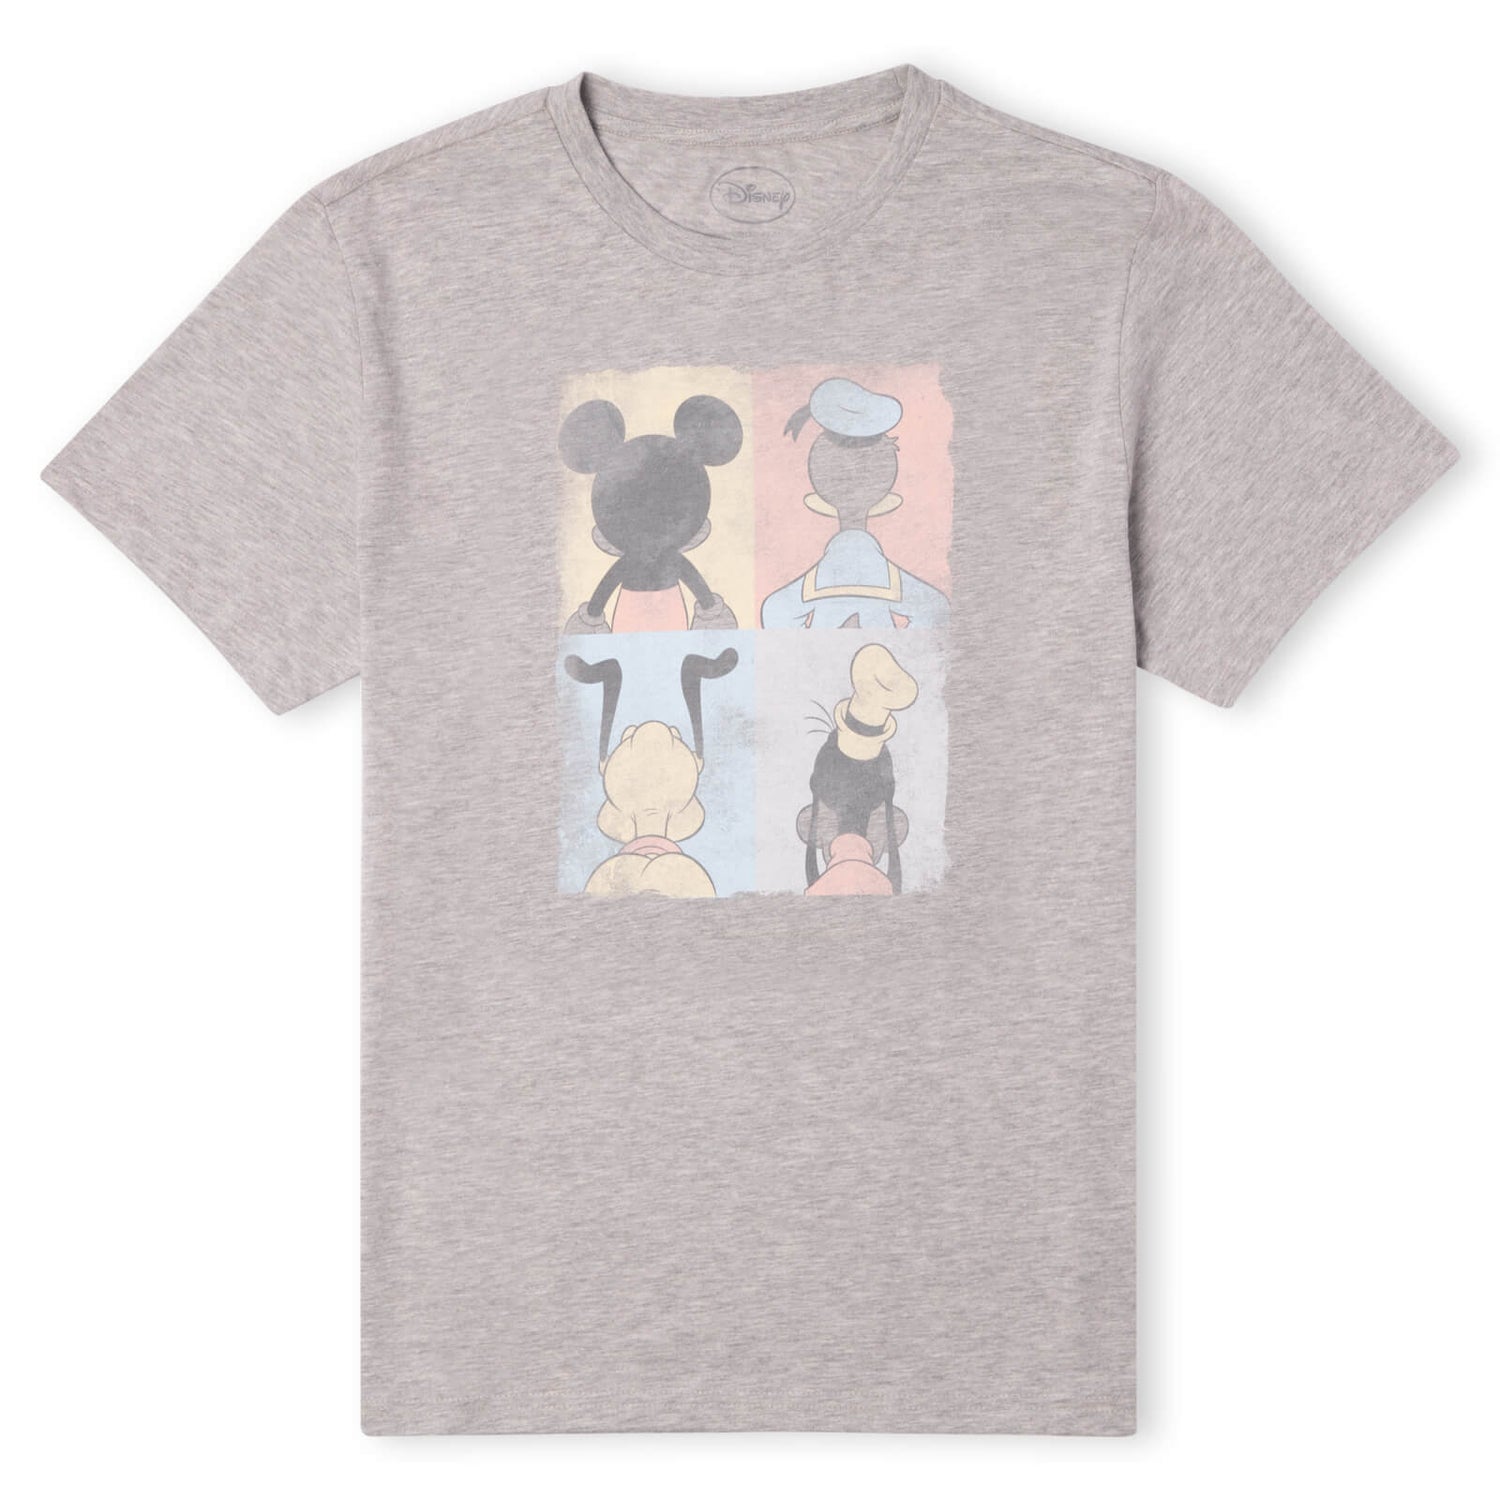 Camiseta Disney Mickey Mouse, Donald, Pluto y Goofy - Hombre - Gris